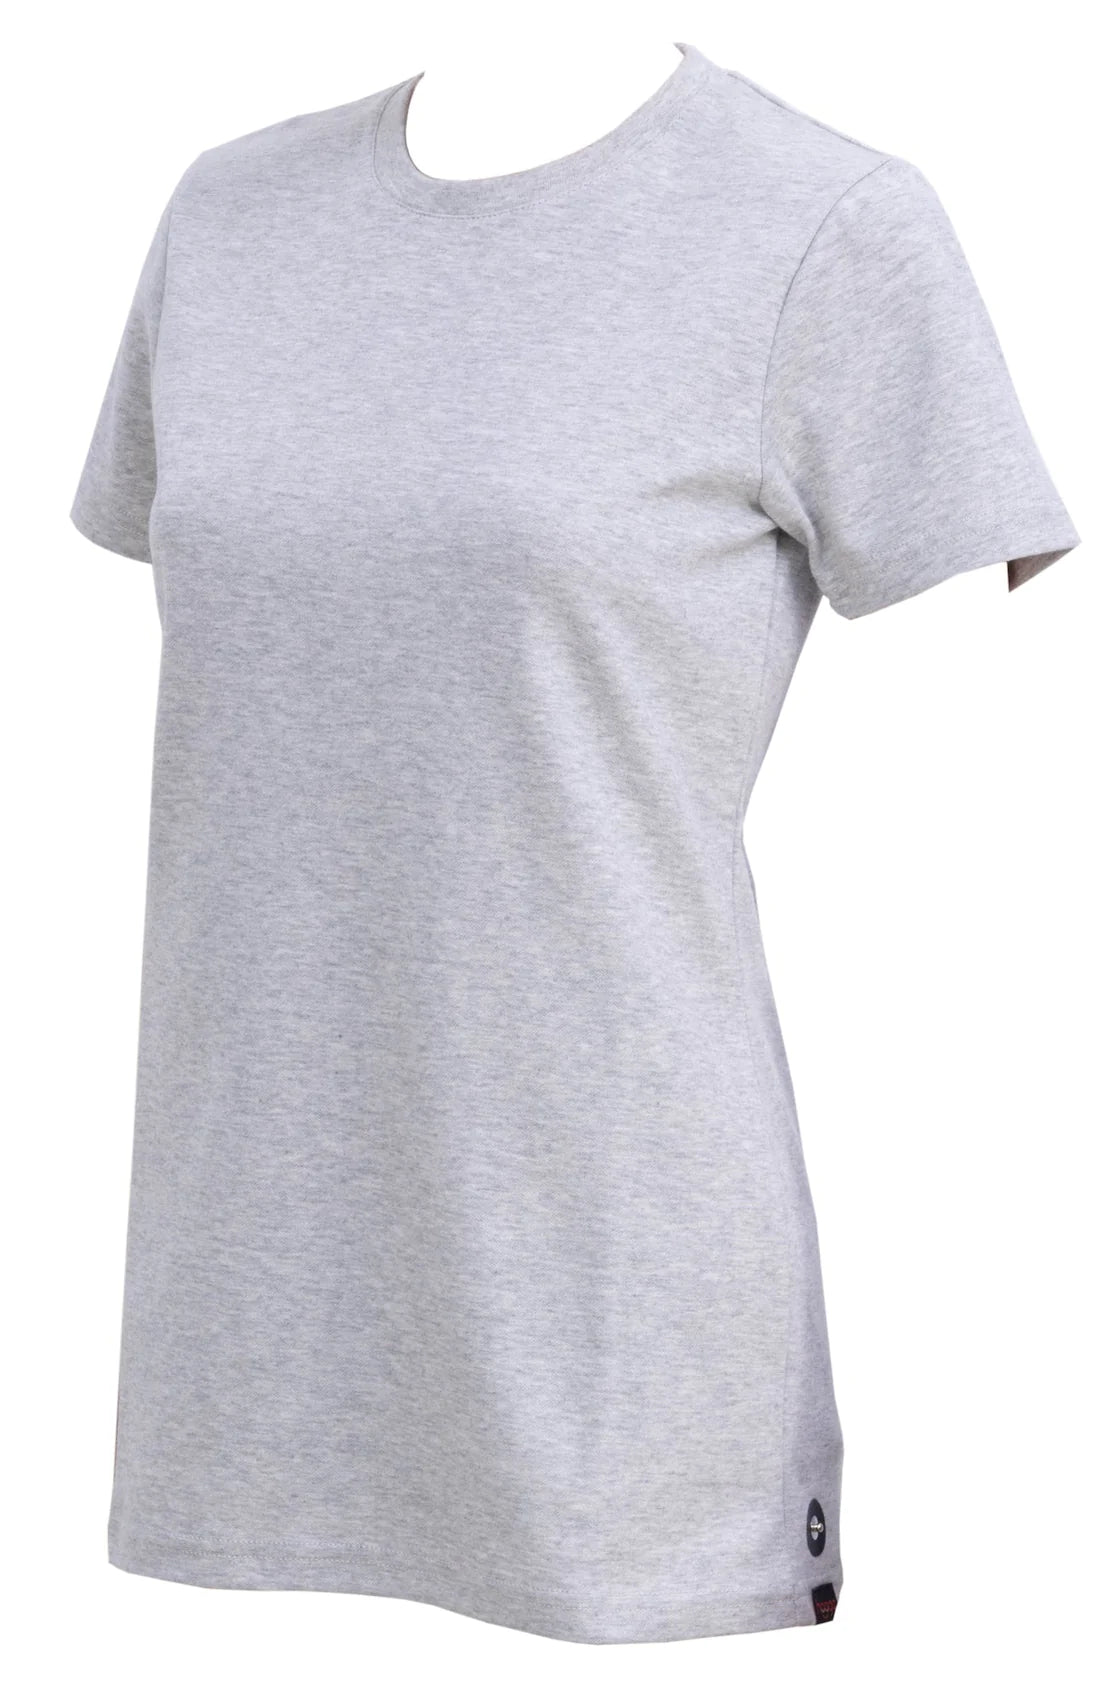 Women's EMF Protection T-Shirt